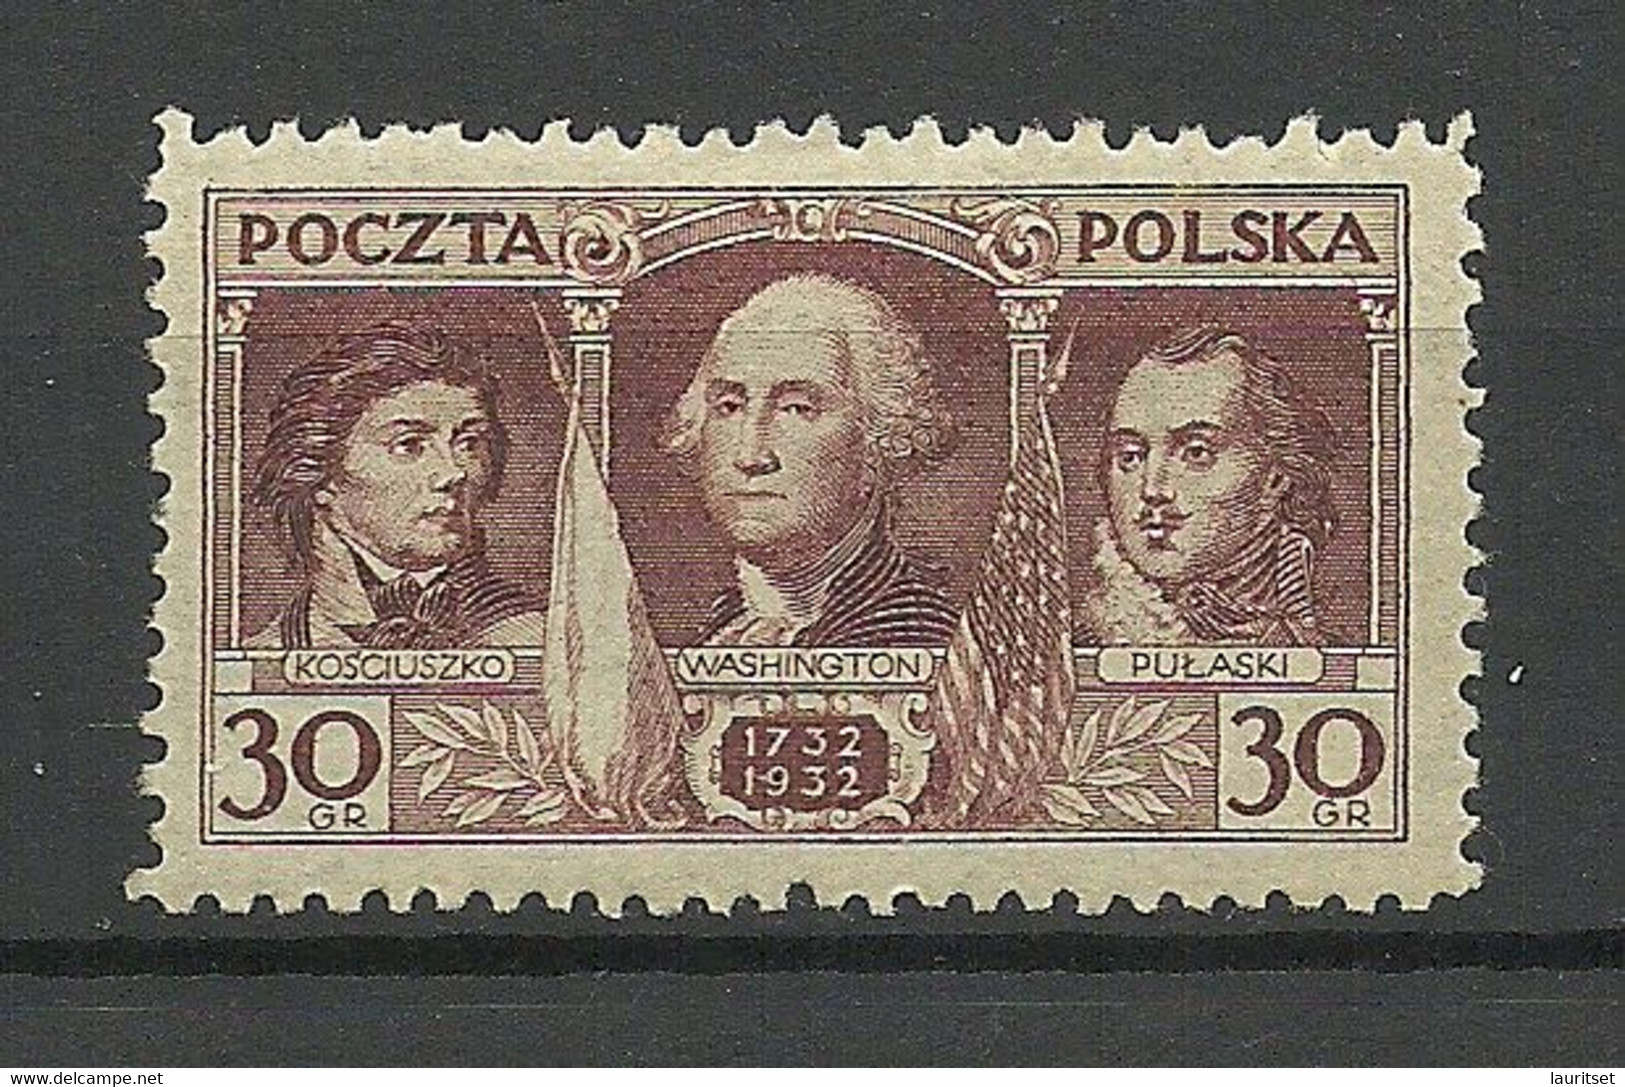 POLEN Poland 1932 Michel 271 * G. Washington - George Washington